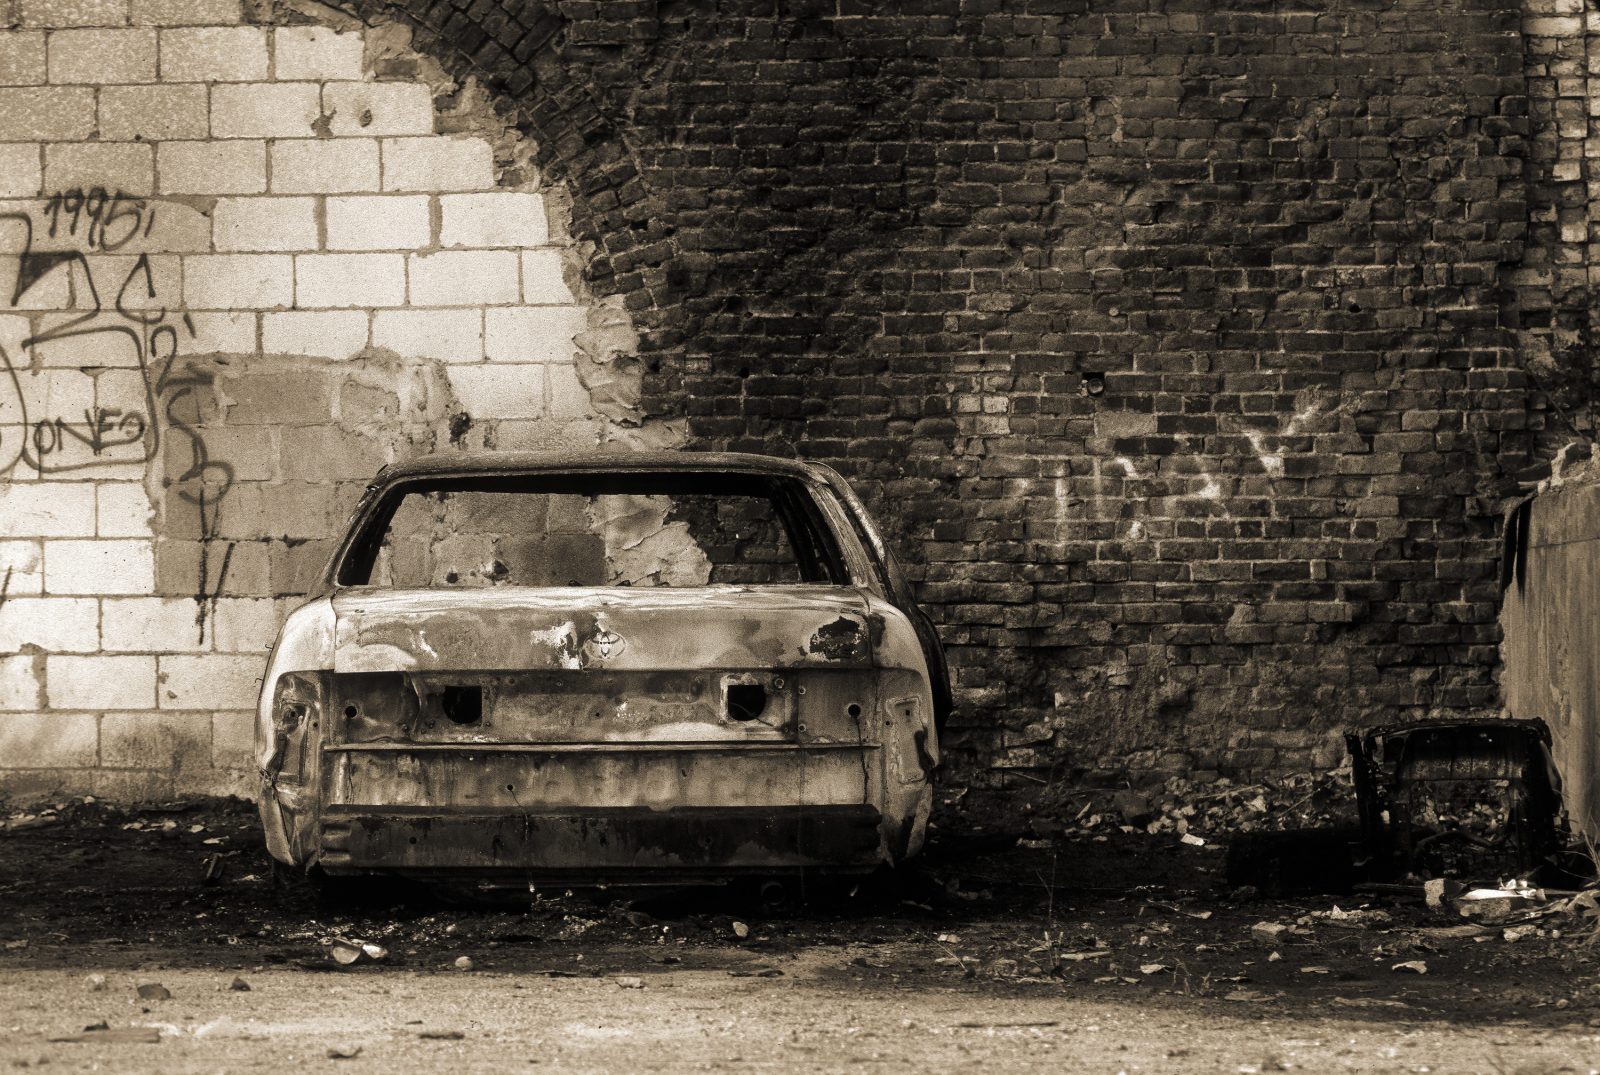 Burned Toyota. Detroit, Michigan.